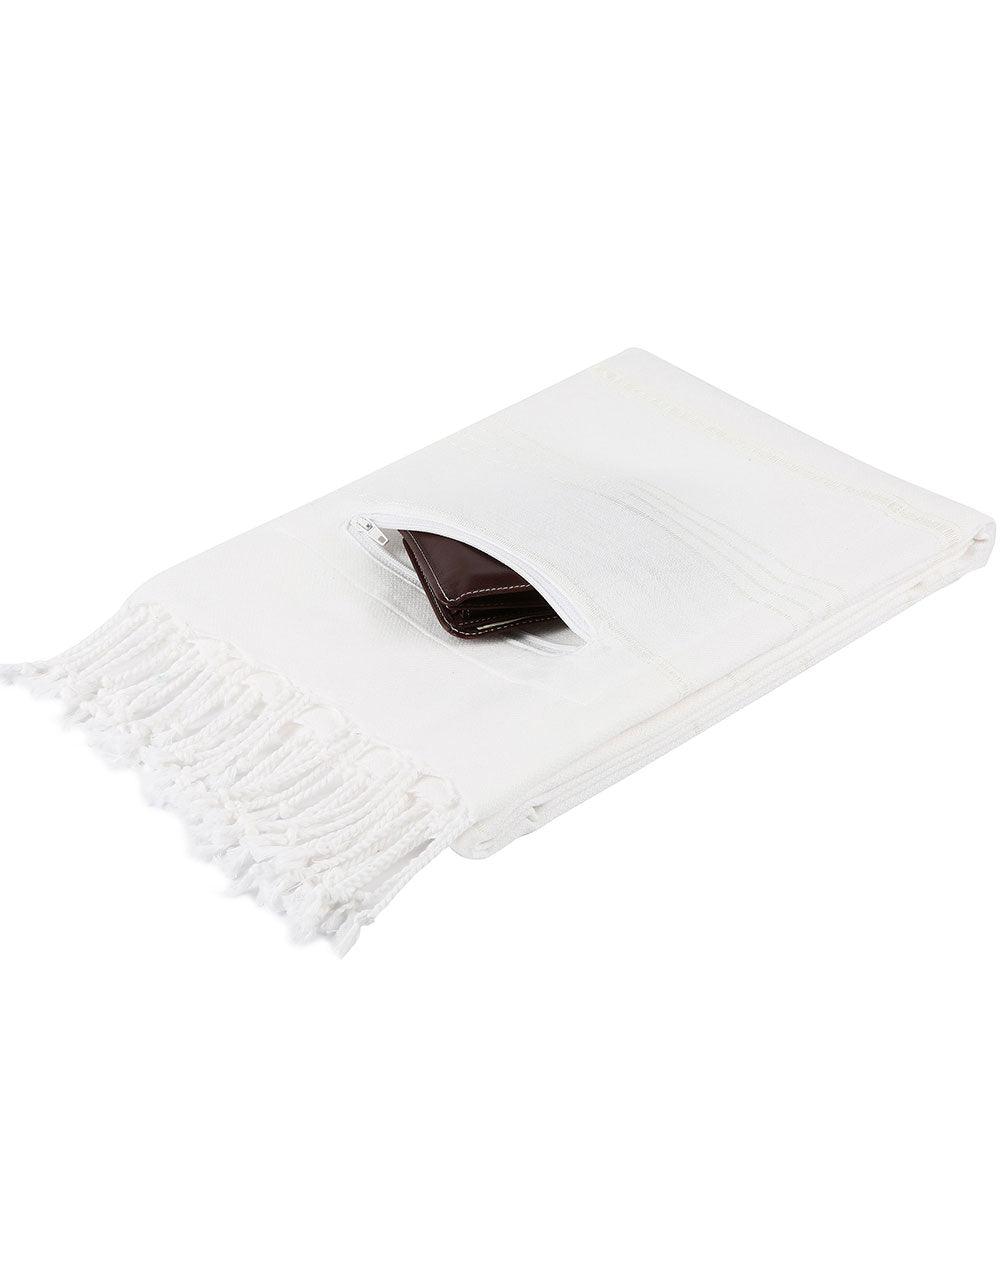 Cacala Tassels Beach Towel Zipper Pestemal 39"x71" 100% Cotton - Cacala